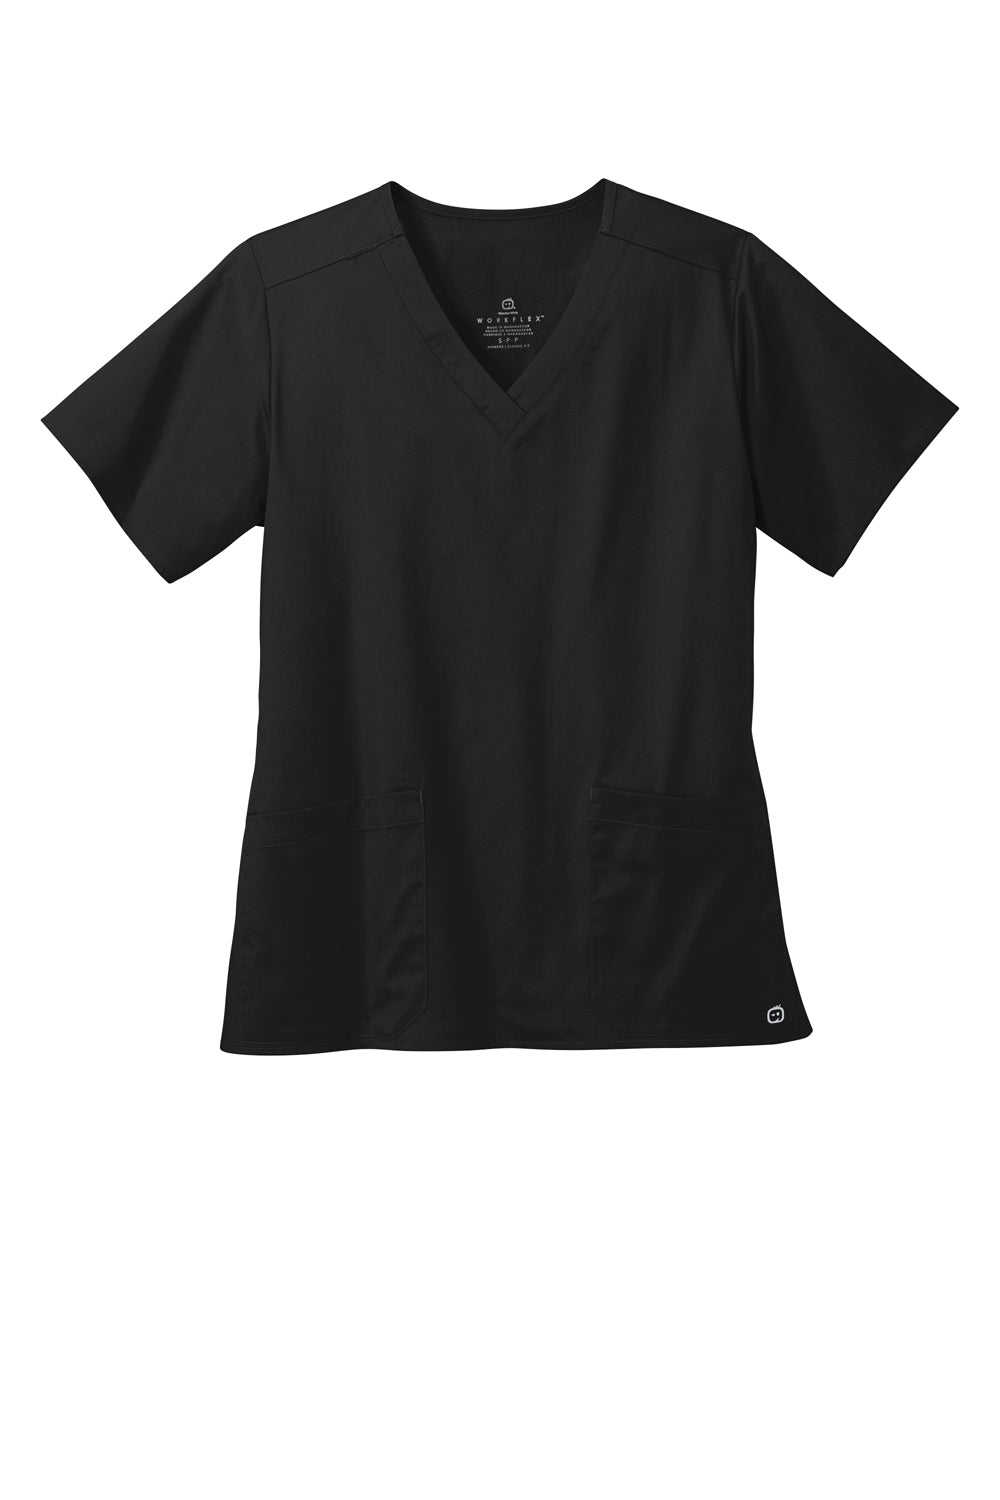 Wonderwink WW4560 WorkFlex Short Sleeve V-Neck Shirt Black Flat Front